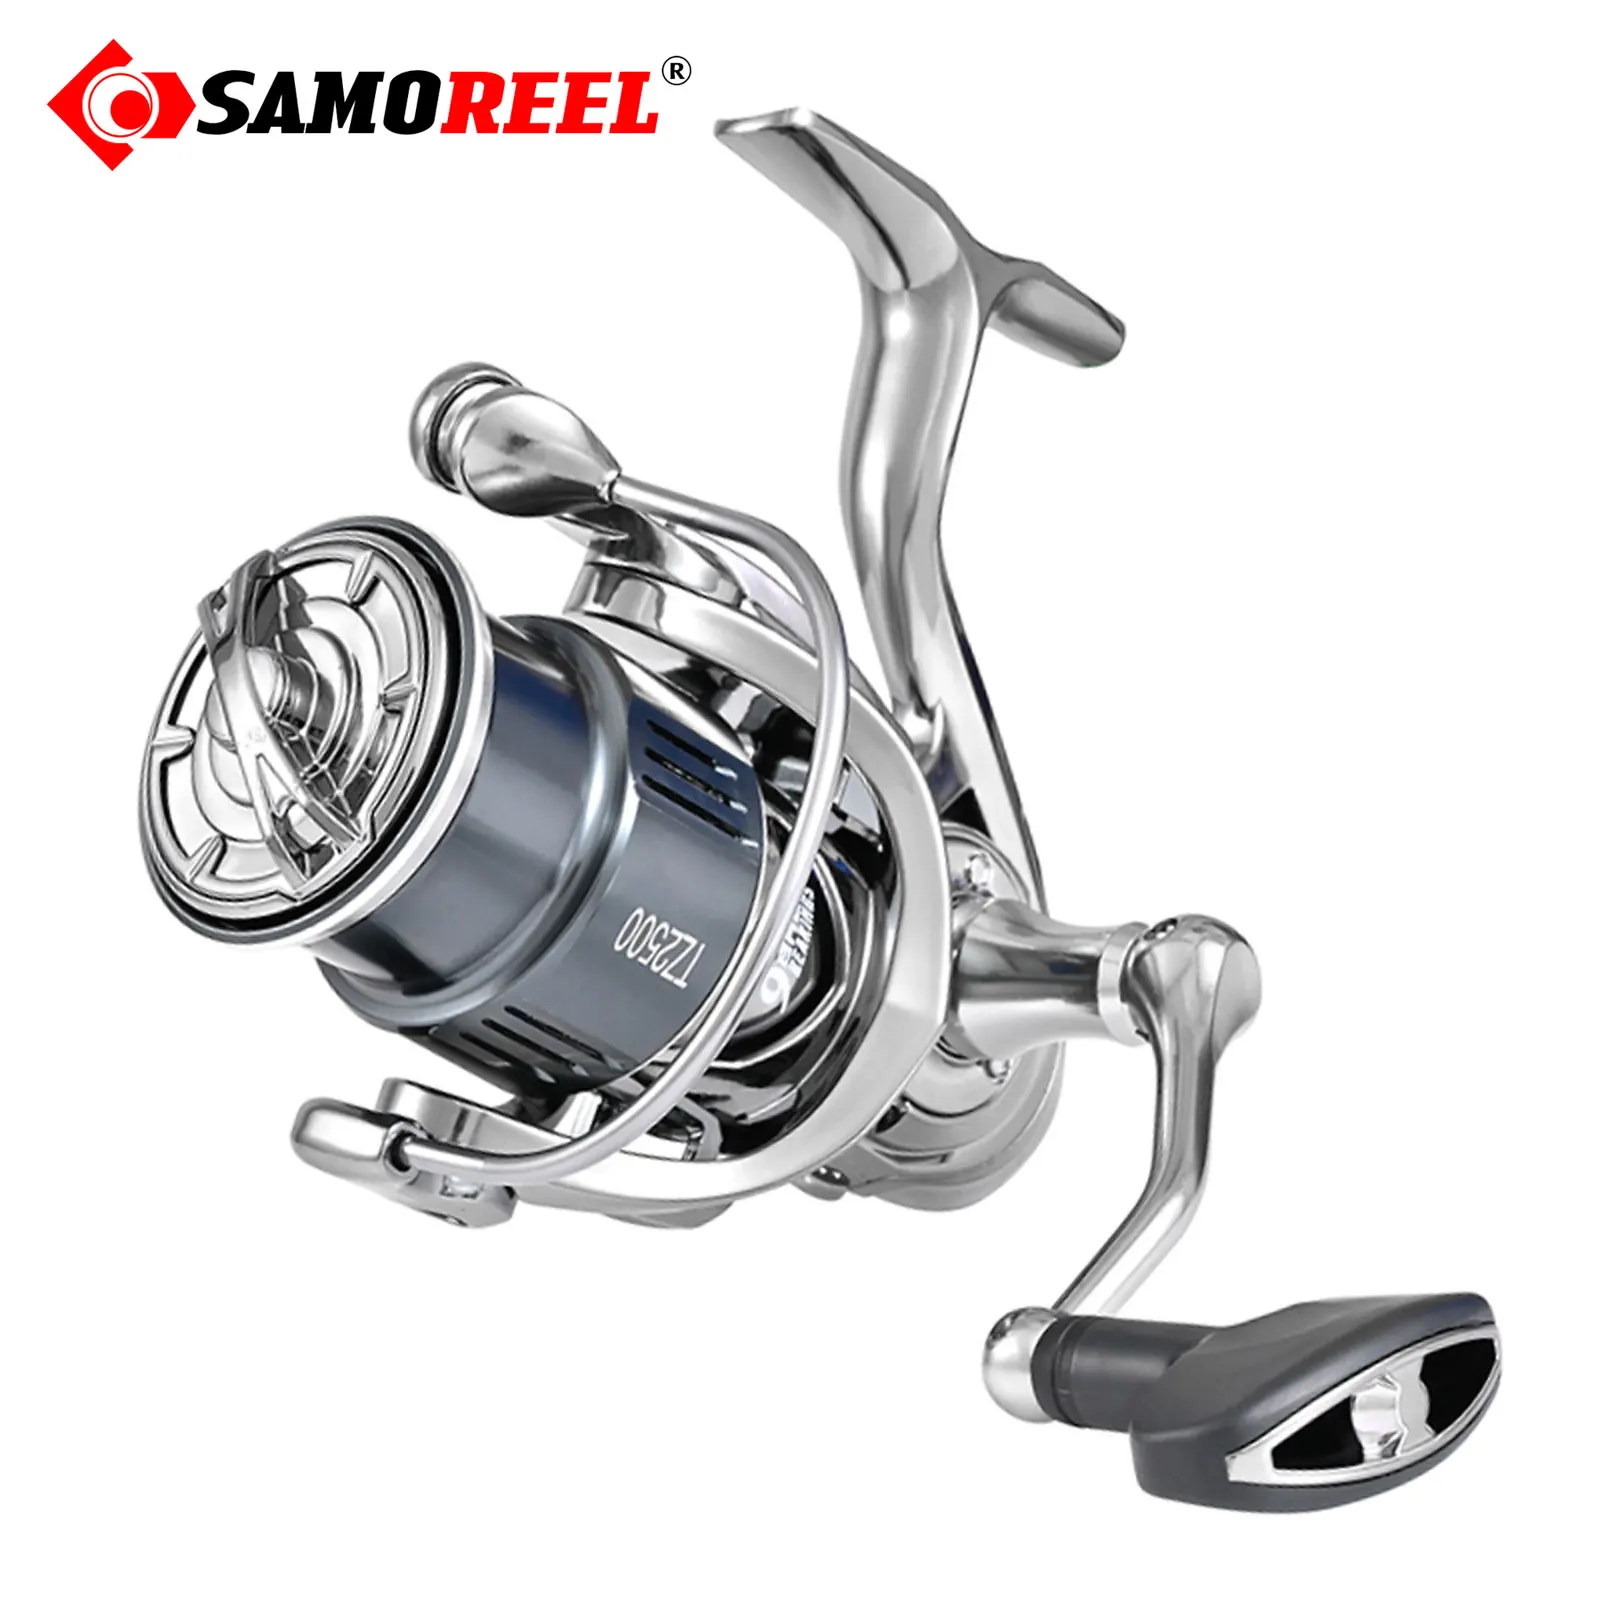 

STELLA'Same SG Ultralight Spinning Fishing Reel High Speed 5.8:1 11BB 10-16kg Drag Saltwater Fishing Tackle Carretilha De Pesca